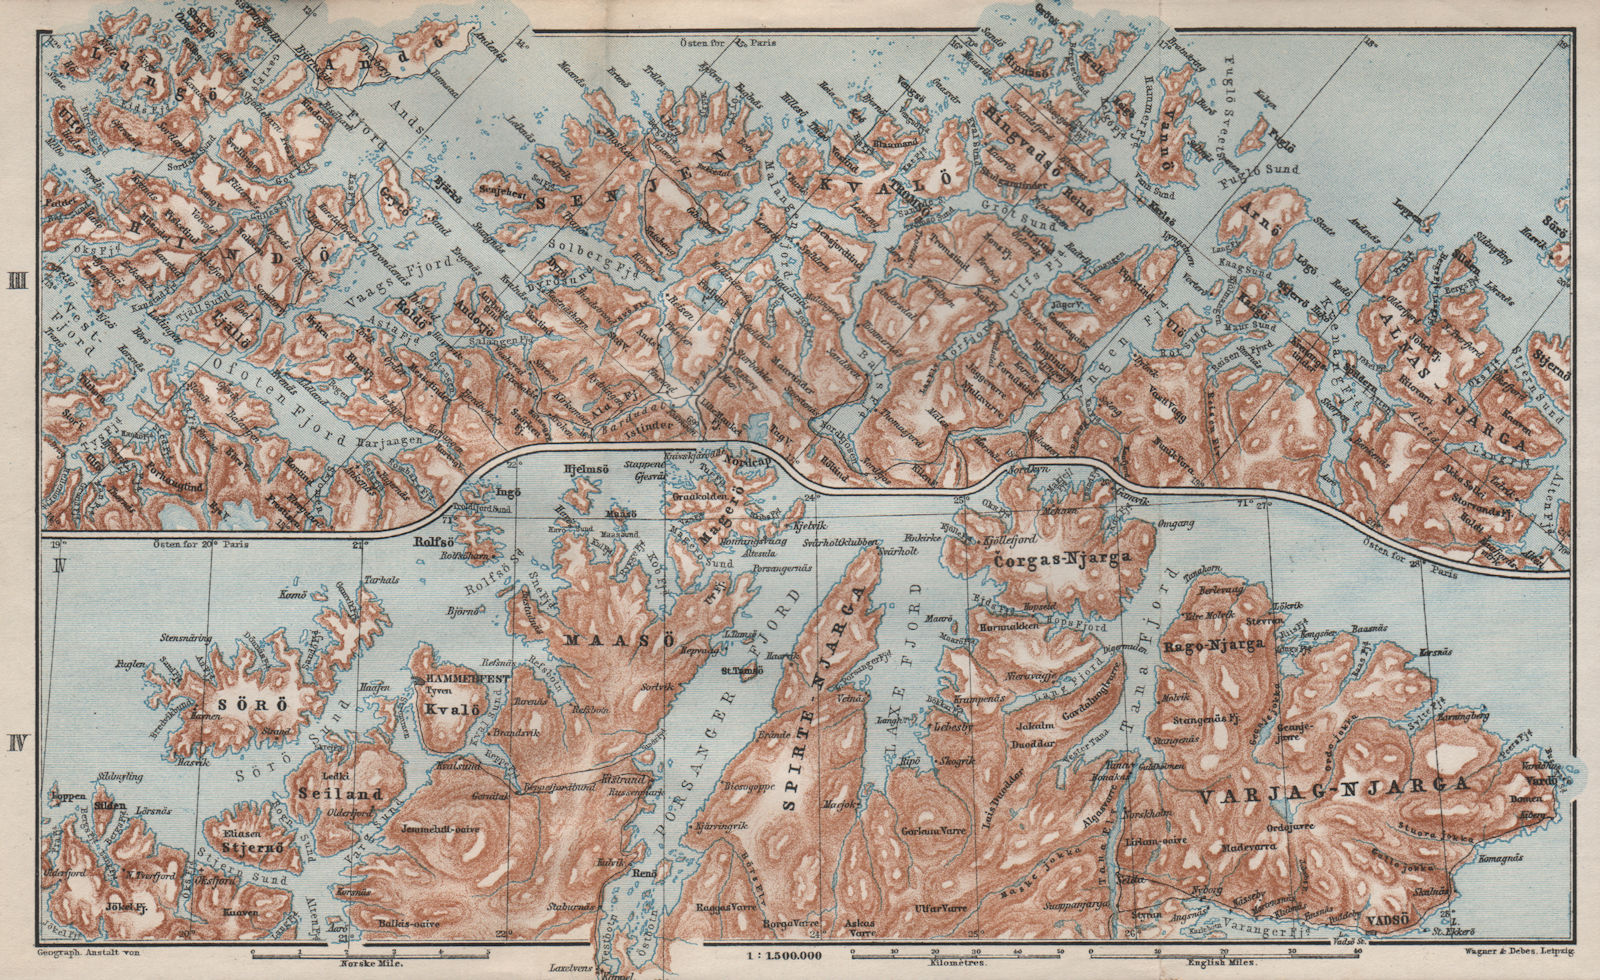 NORWAY NORTH COAST. Tromso-North Cape/Nordkapp-Vadso Topo-map. Norway 1885